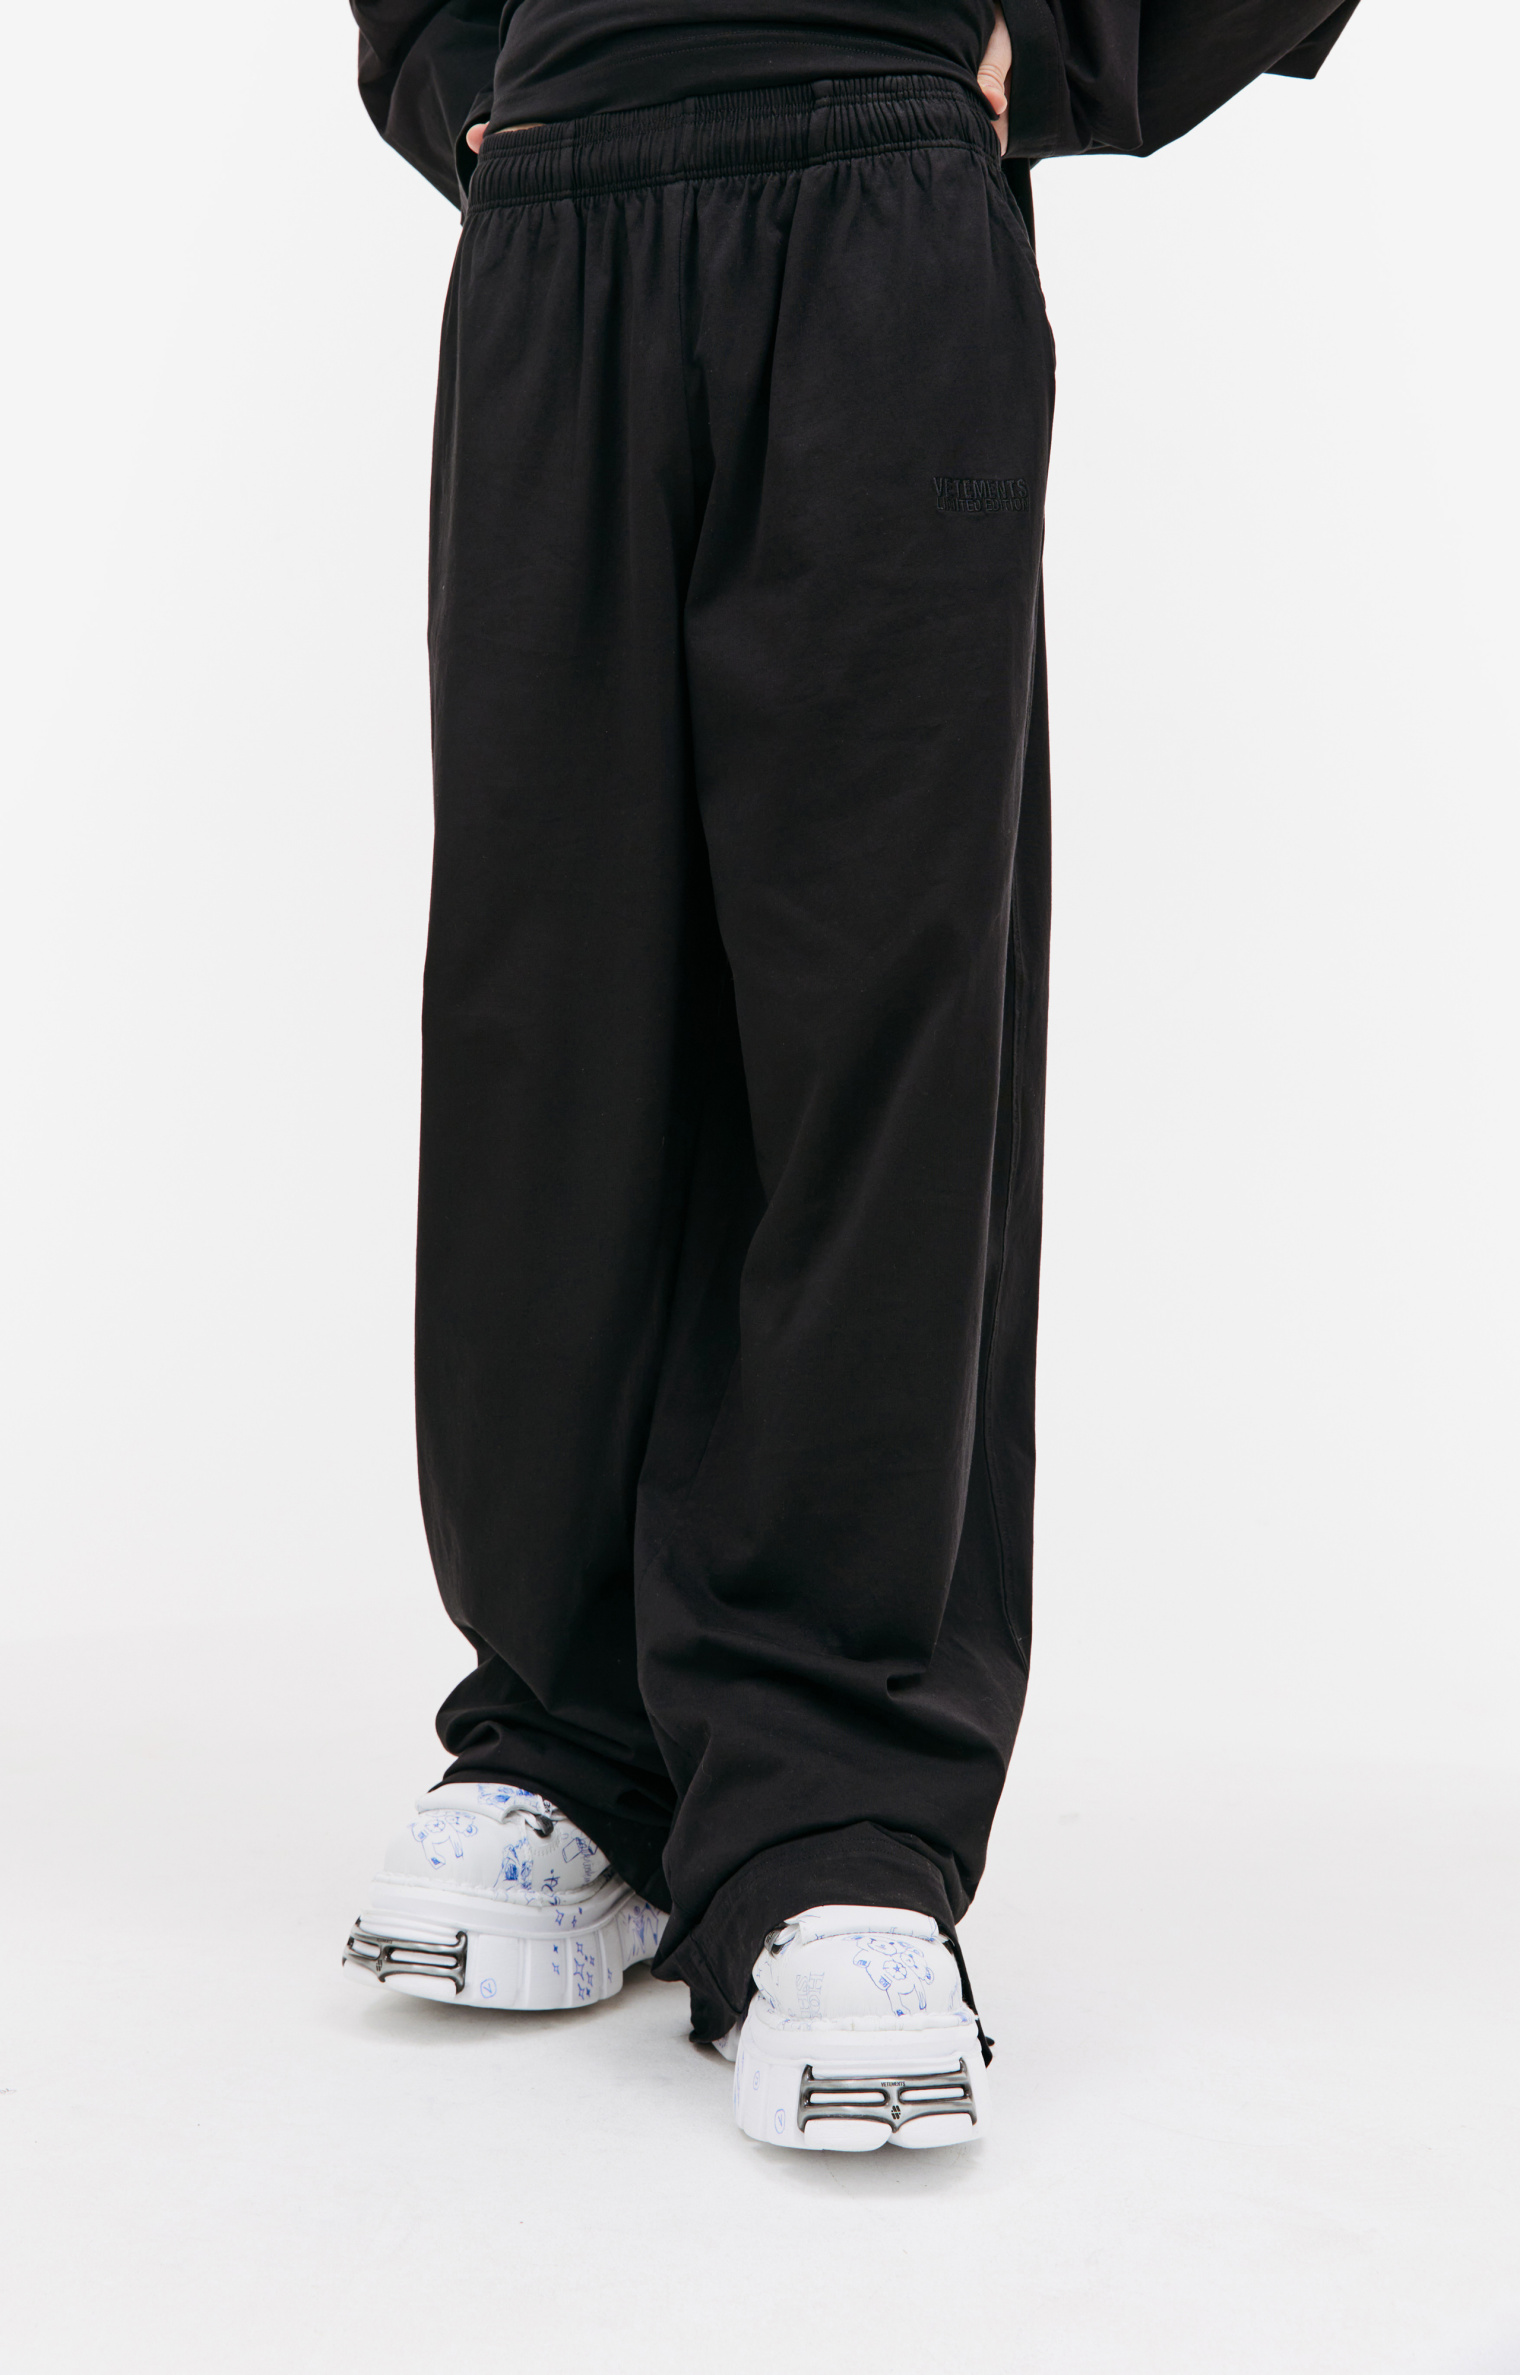 Buy VETEMENTS men black oversized sweatpants for $935 online on SV77,  UE64SP700B